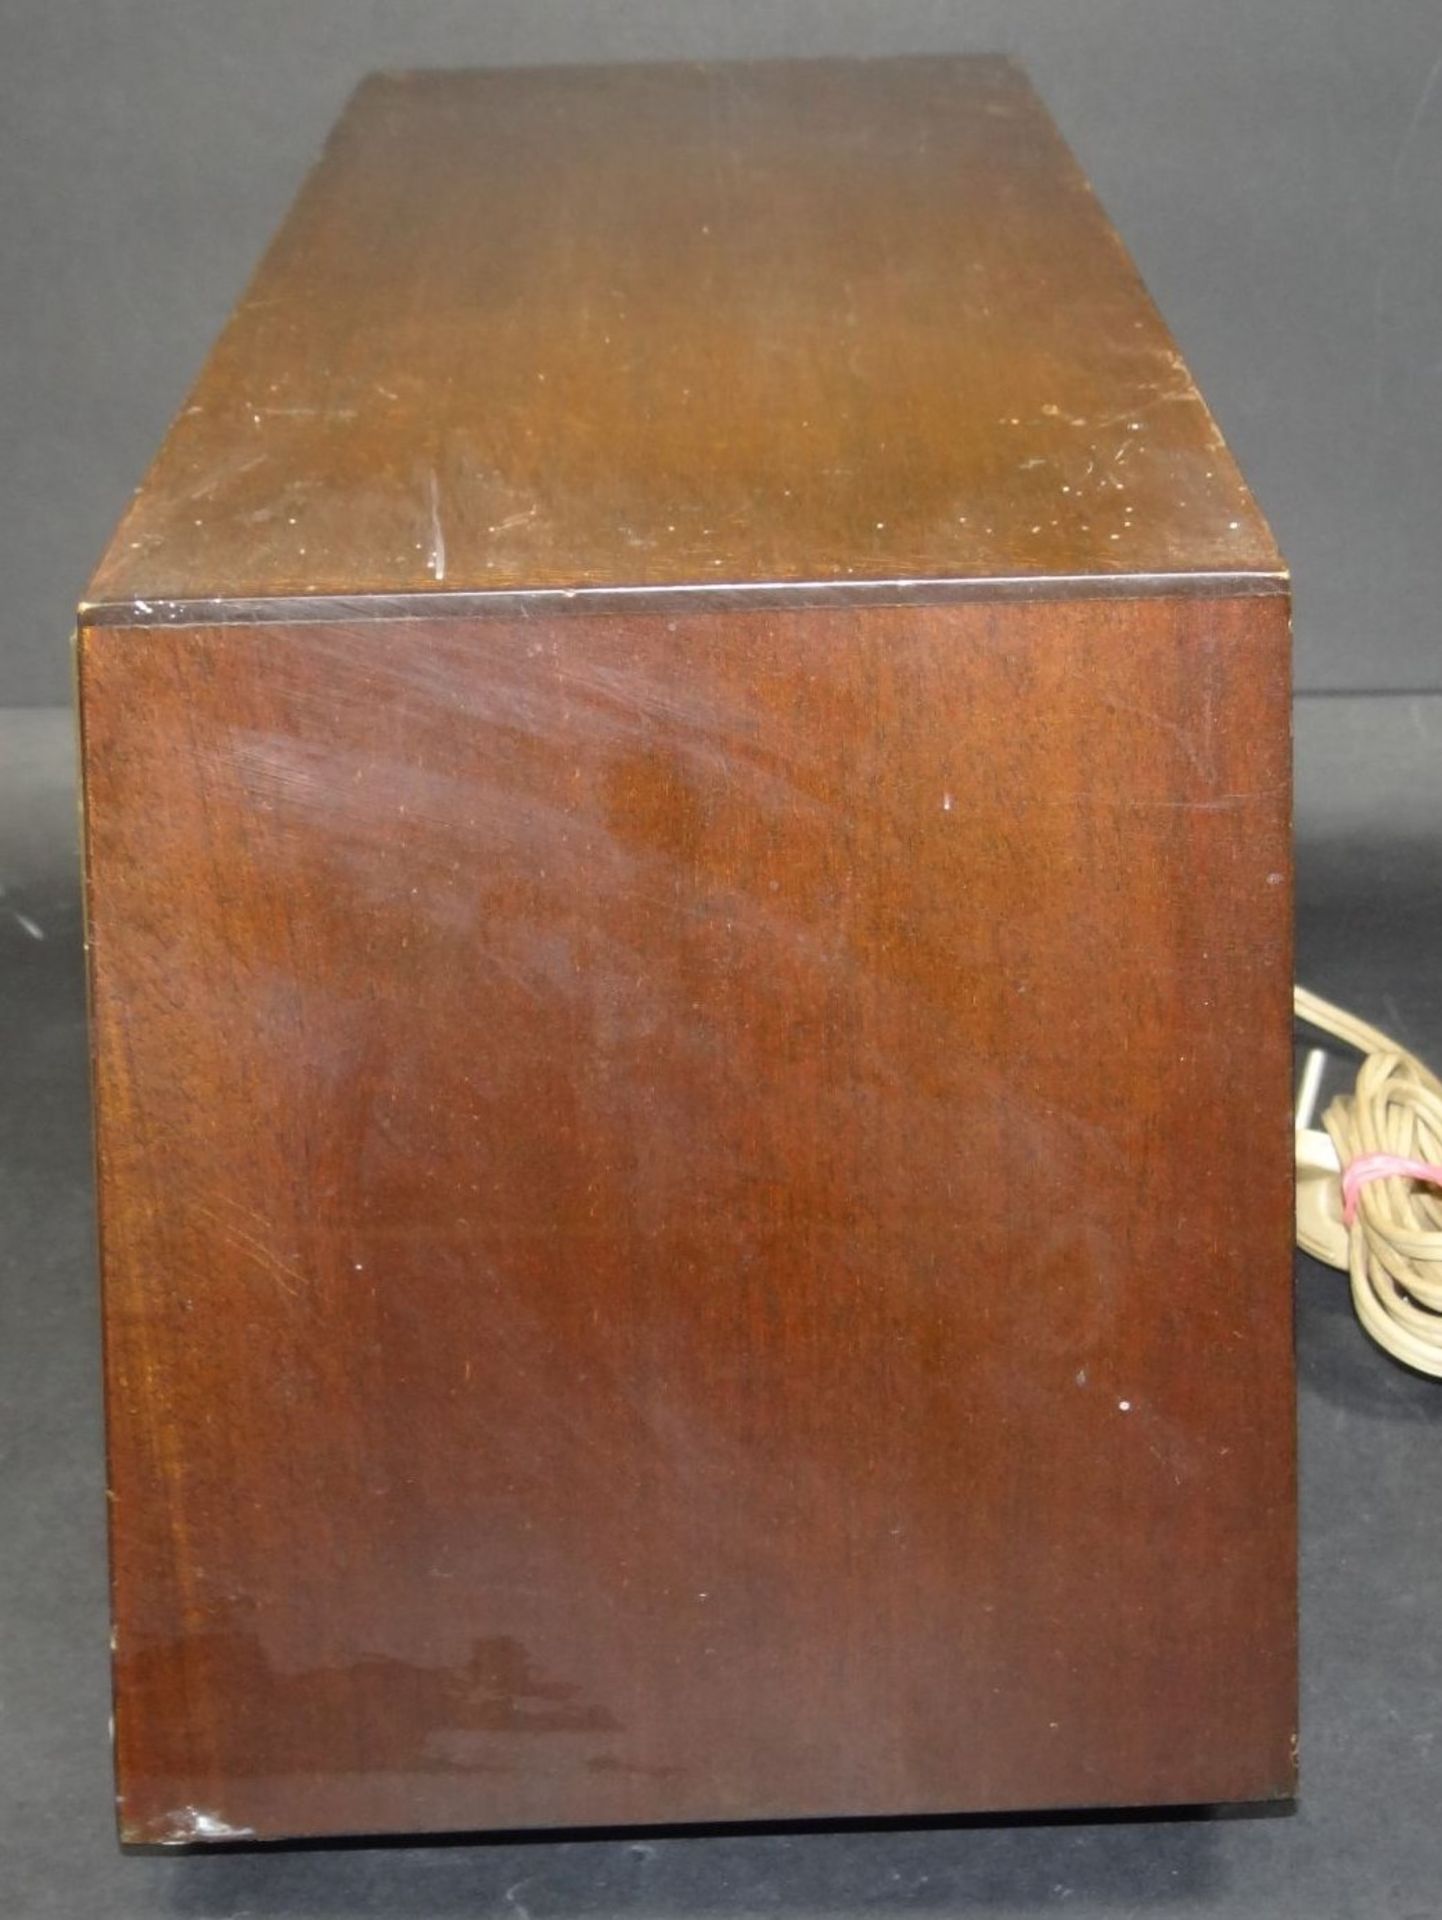 kleines Holzradio "Telefunken" Jubilate de Luxe, H-22 cm, B-37 cm - Bild 4 aus 6